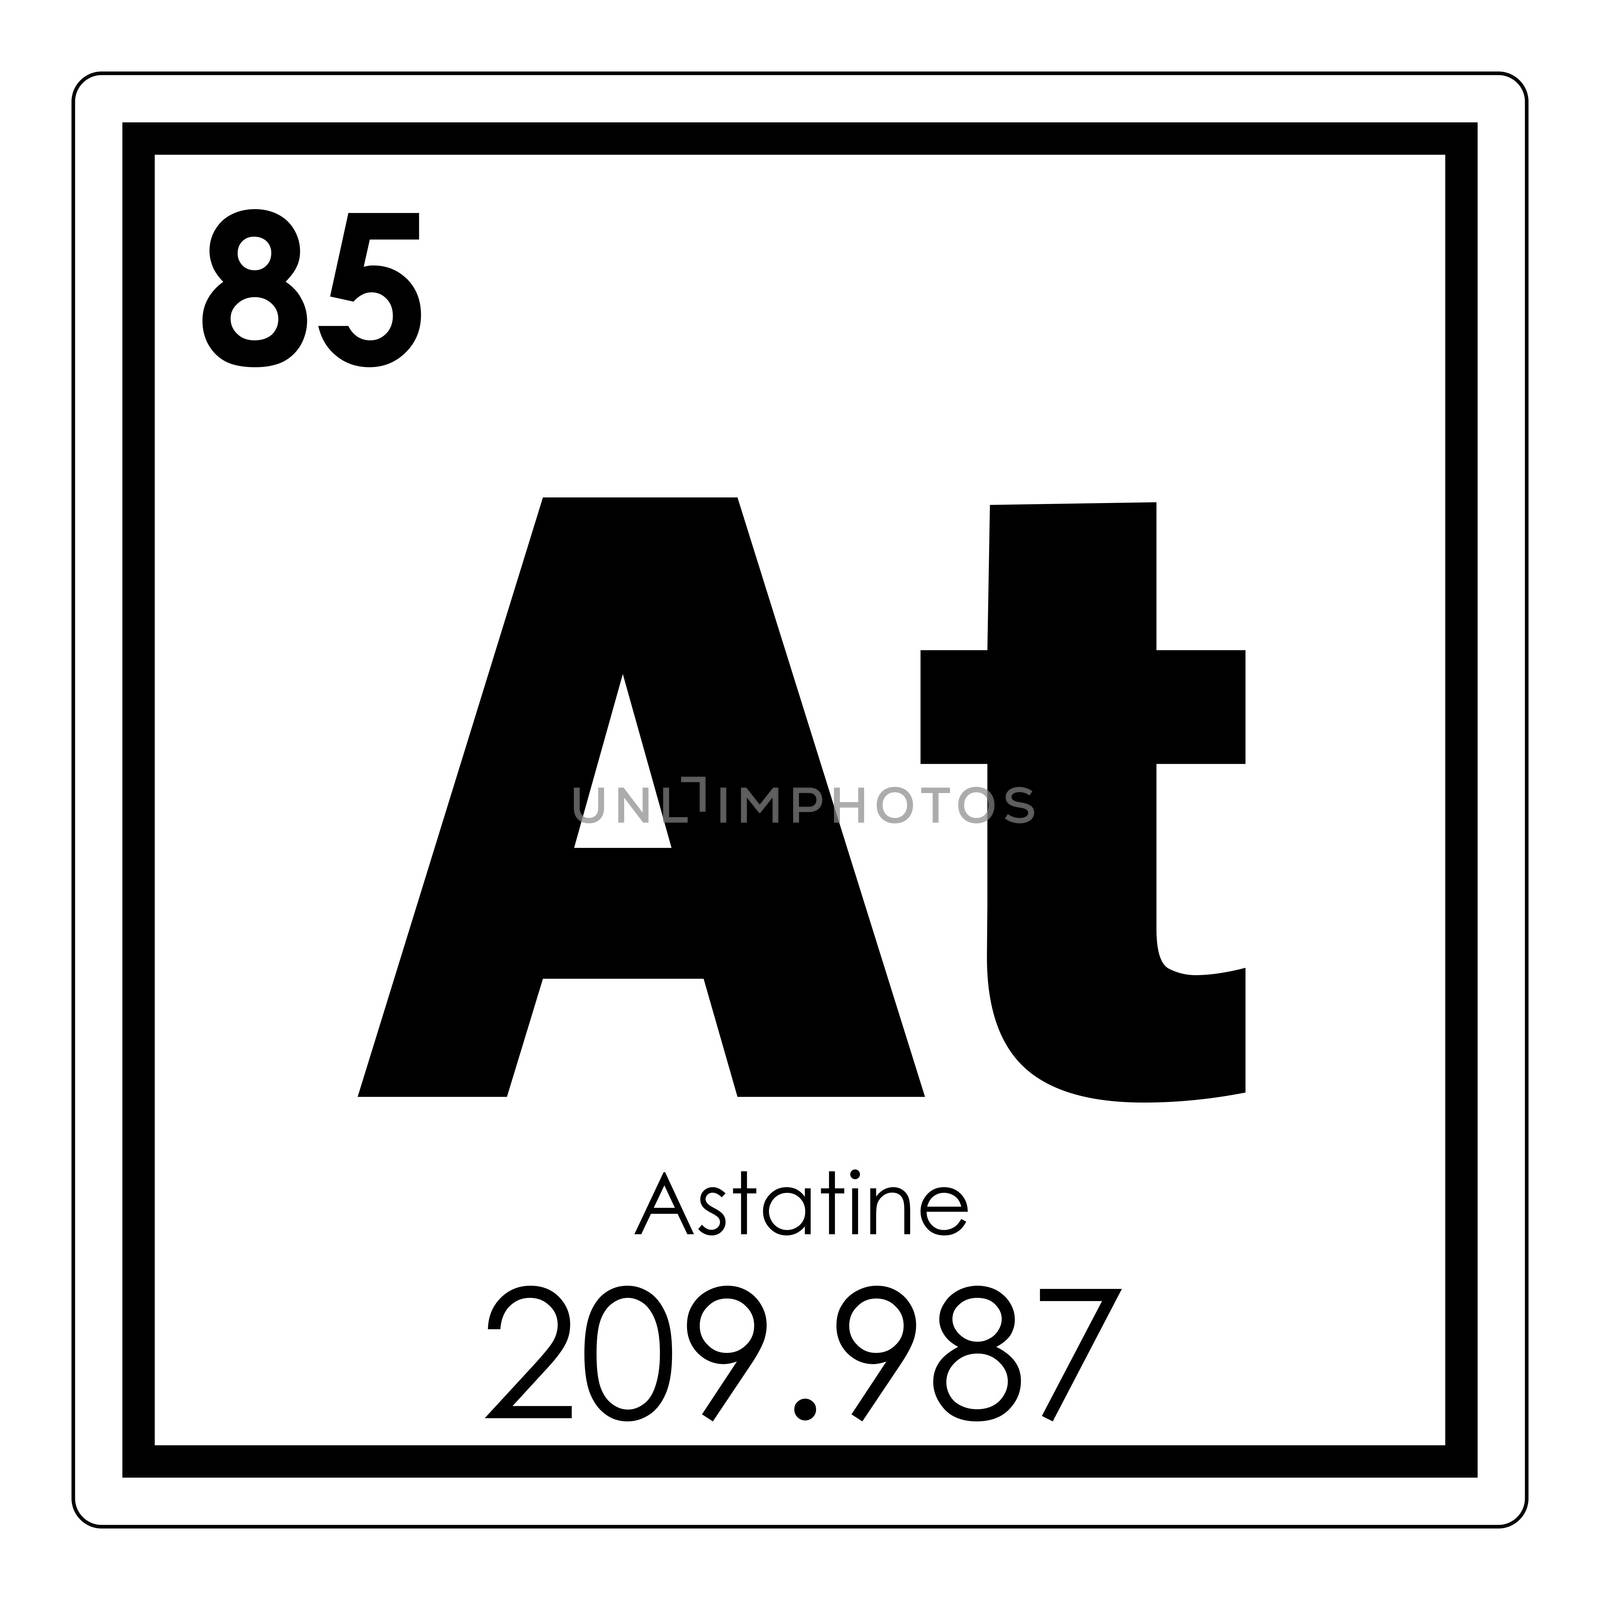 Astatine chemical element by tony4urban